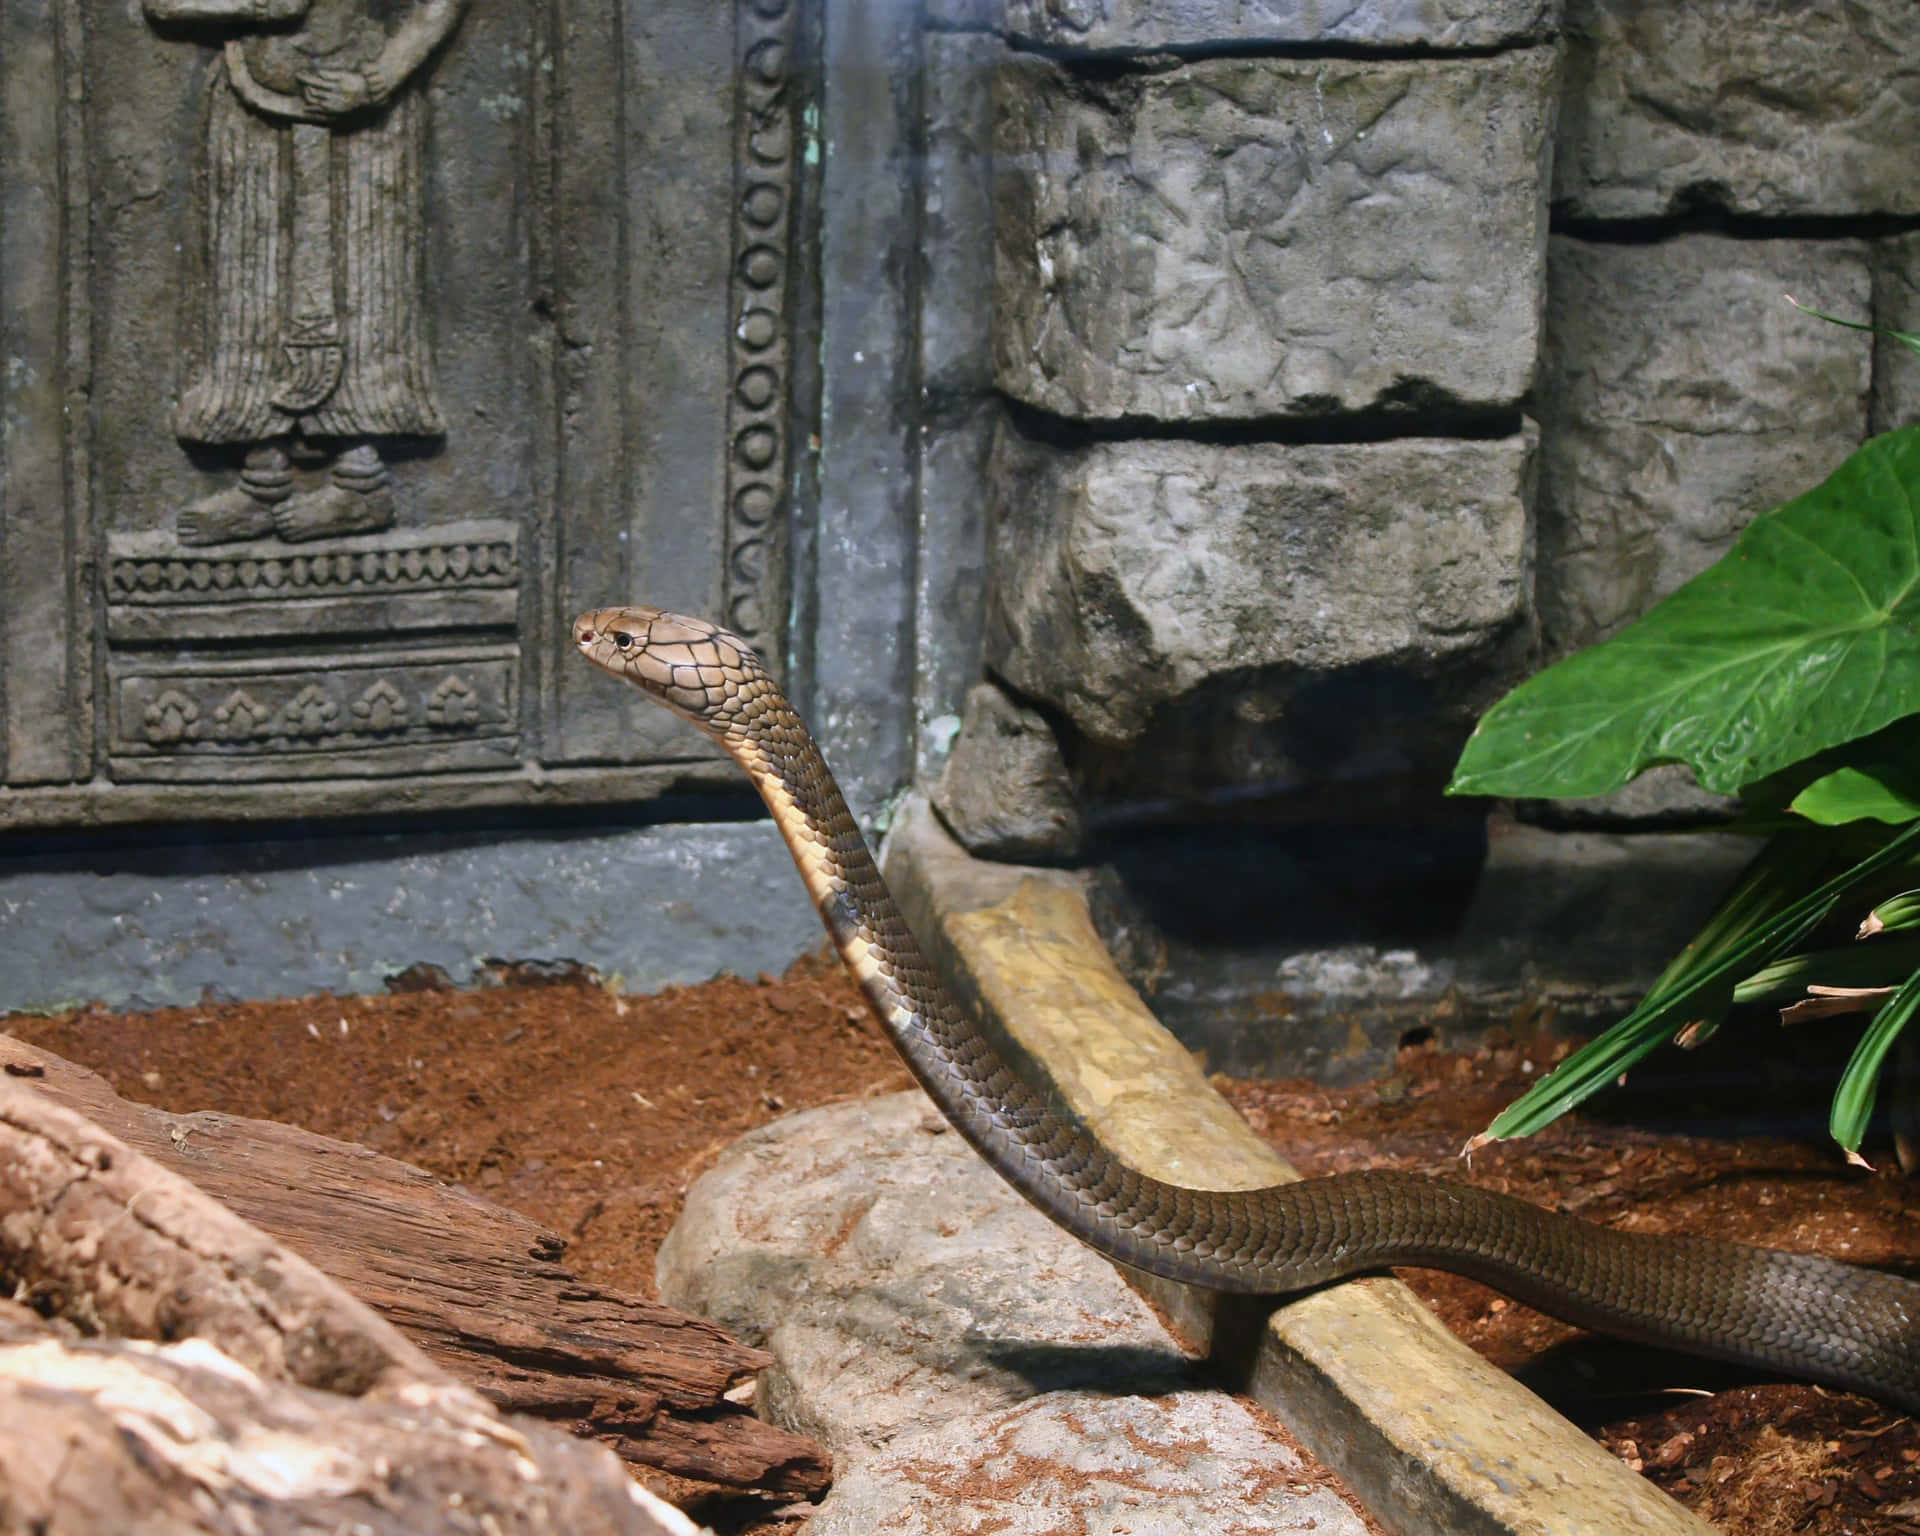 A close-up image of a King Cobra snake